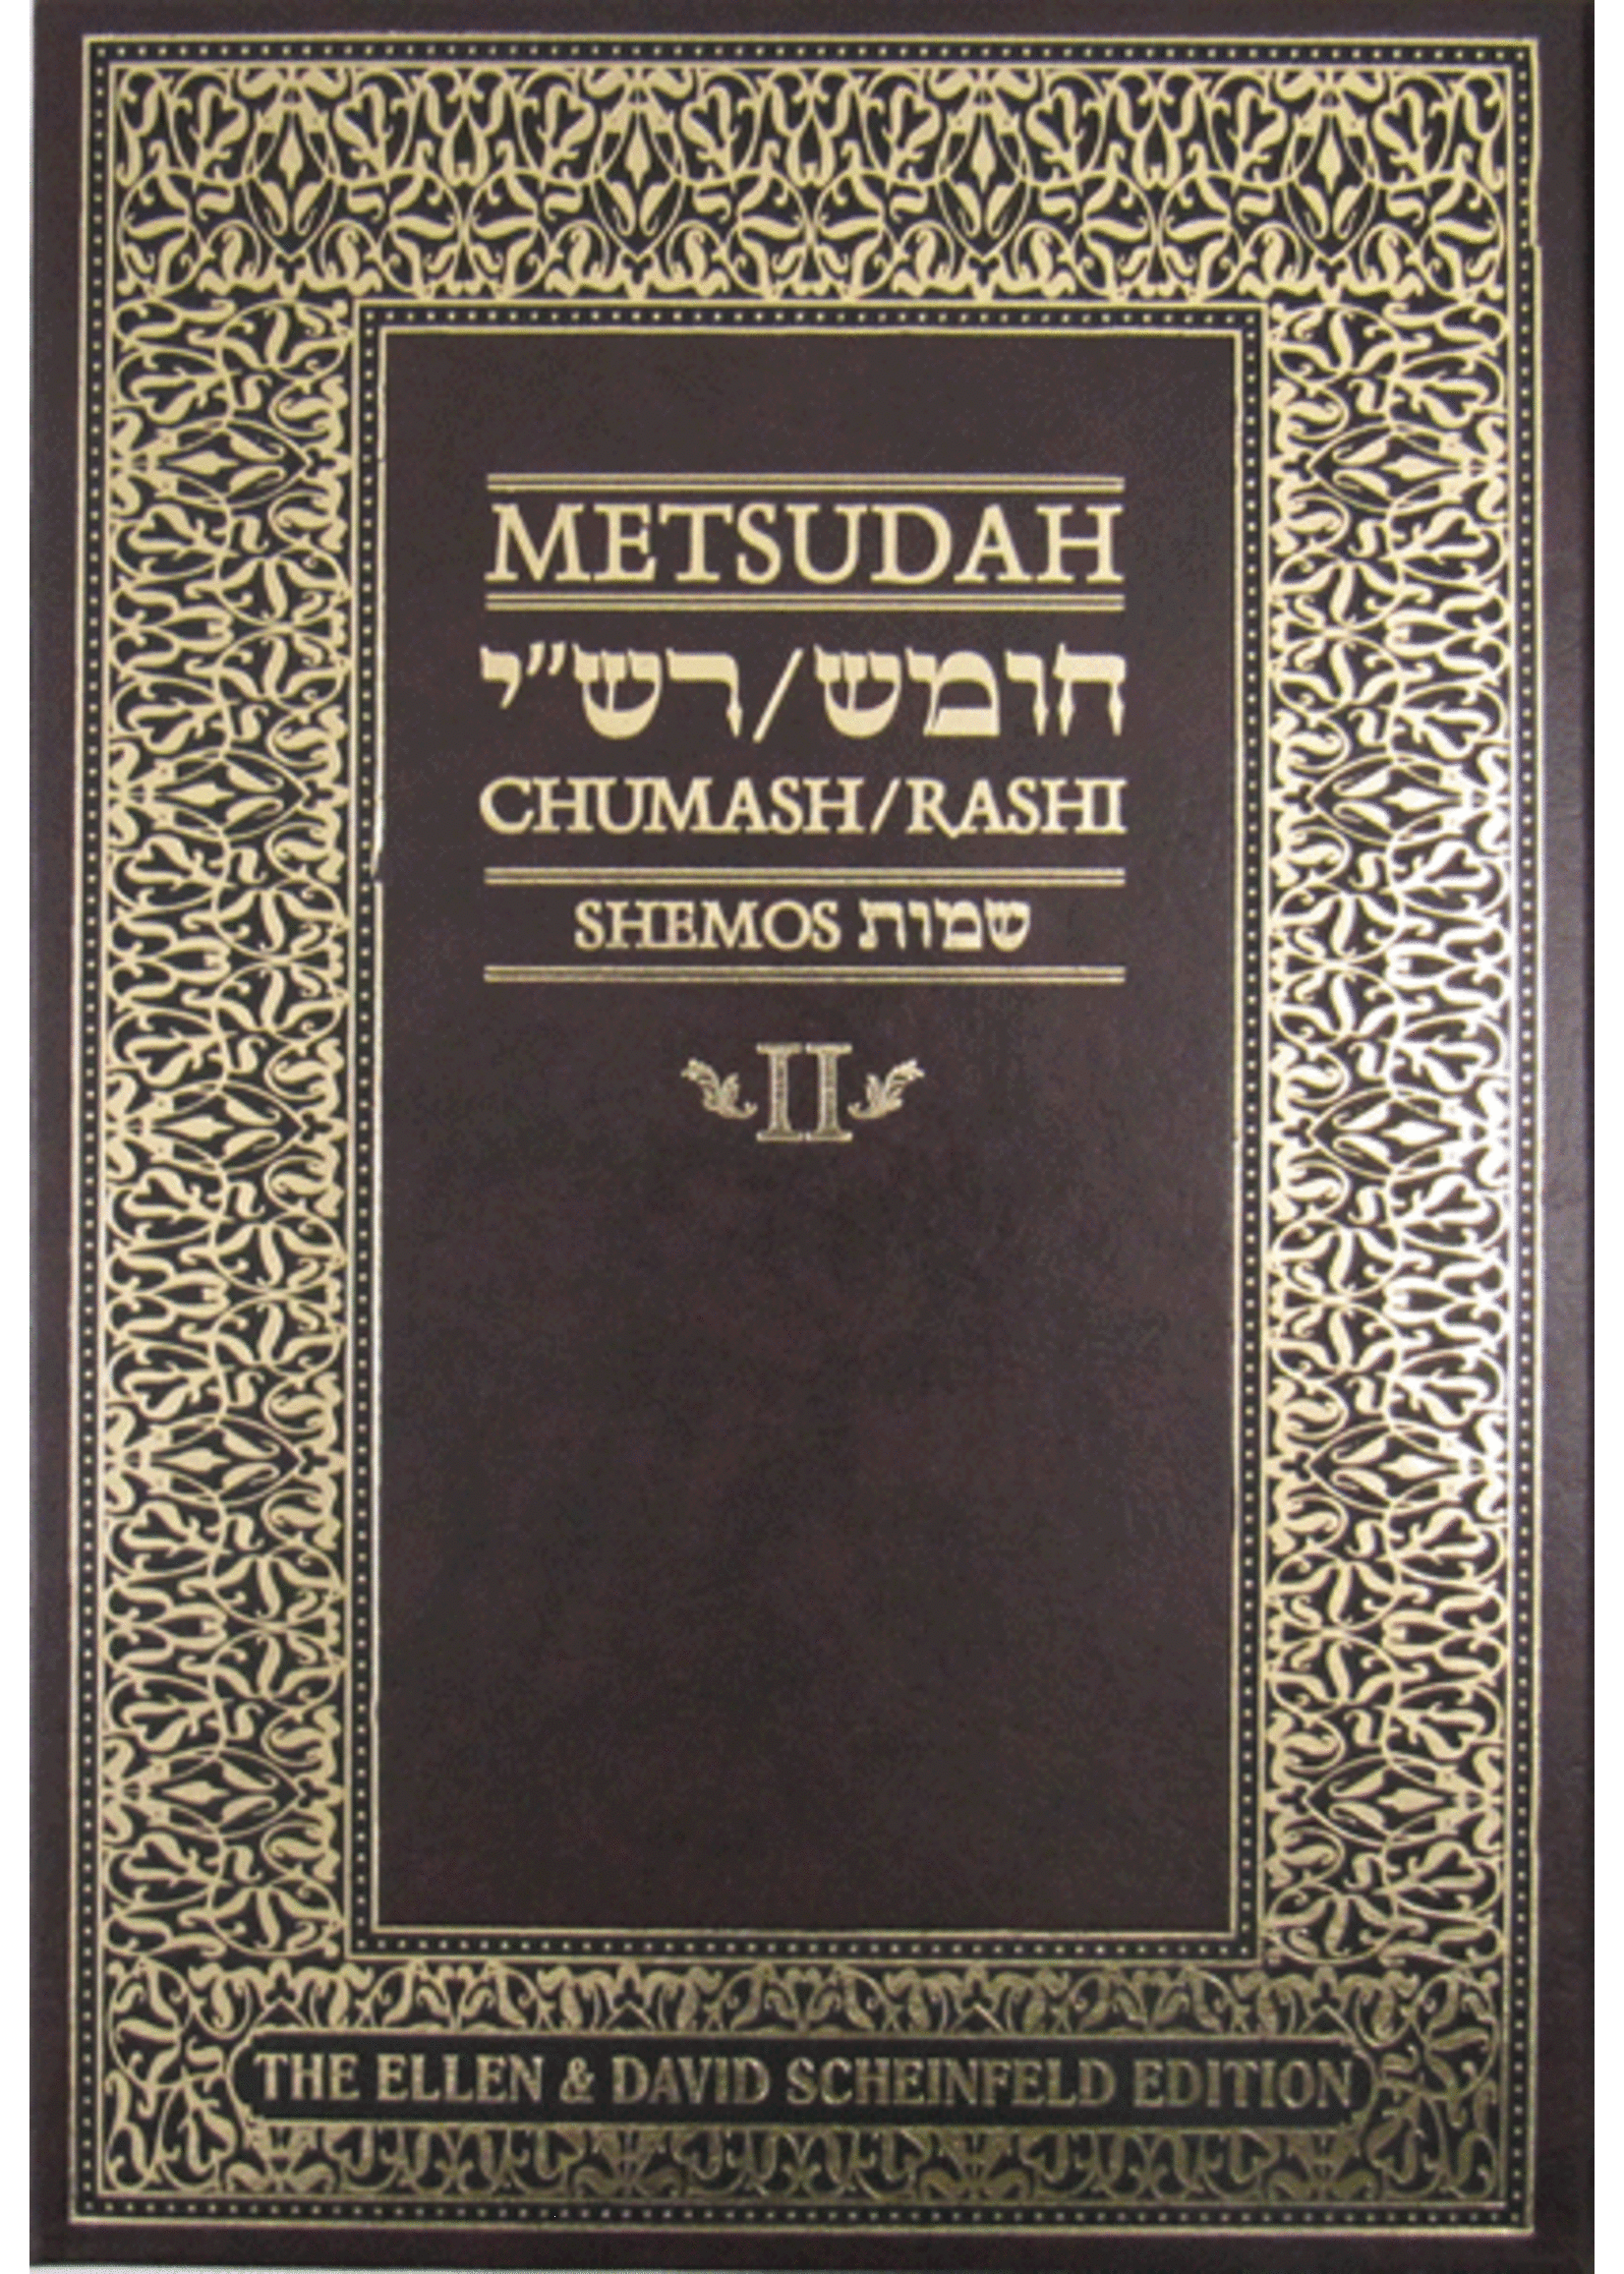 METSUDAH SHEMOS STUDENT